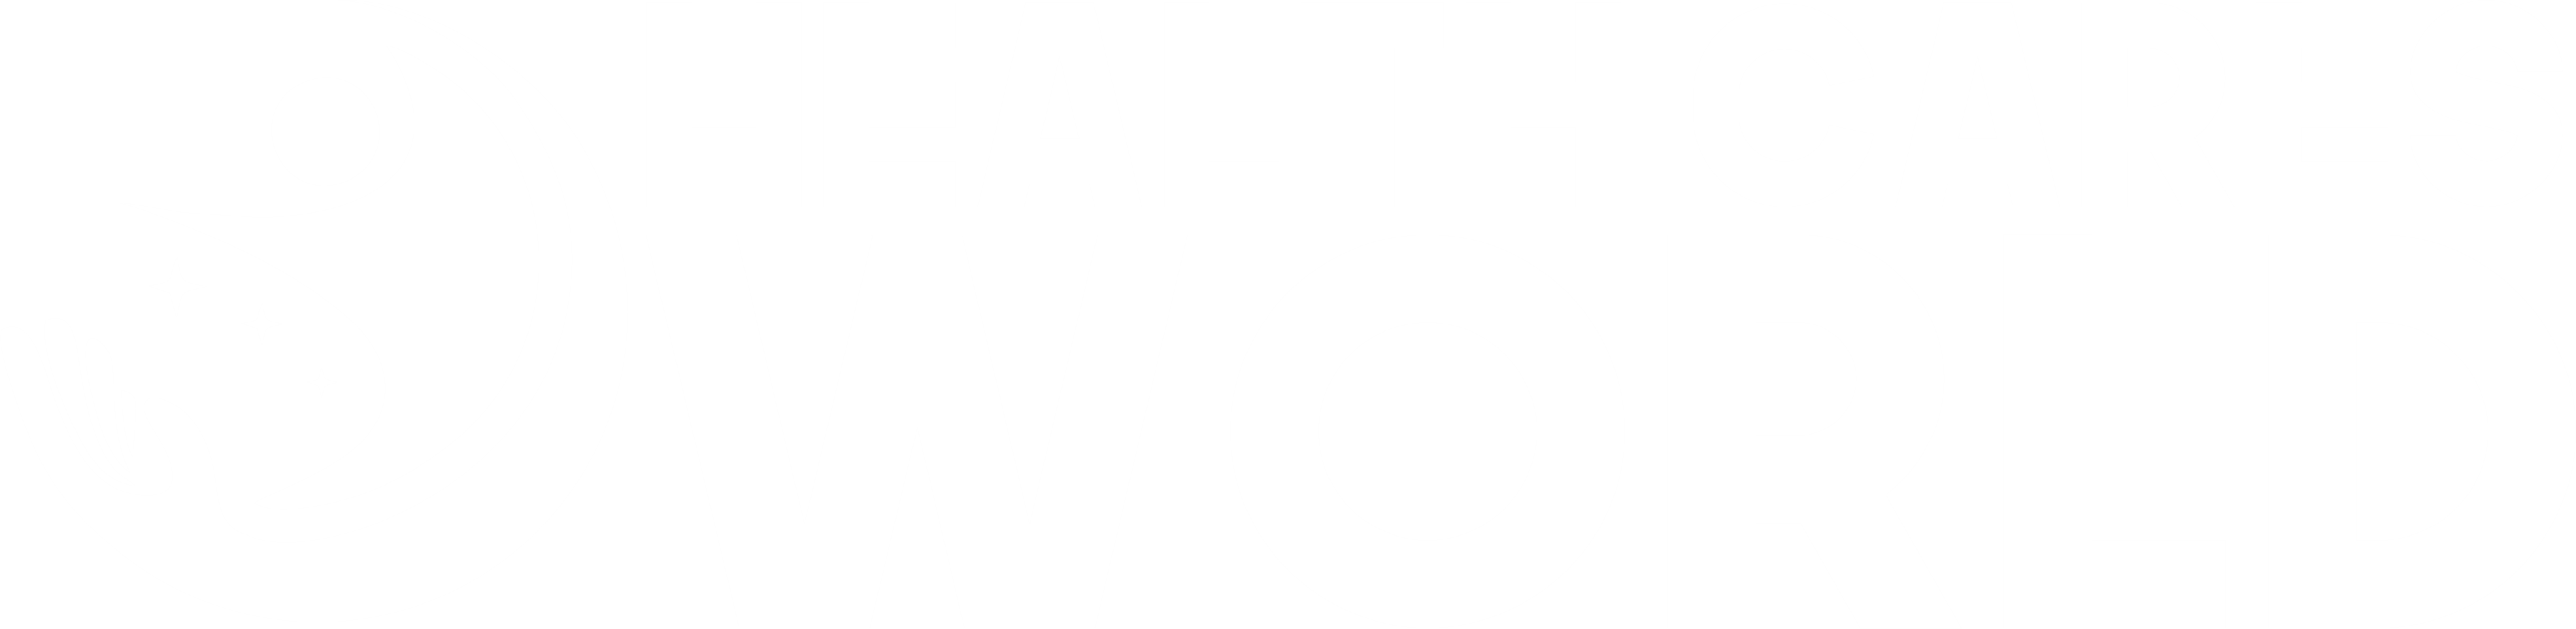 Health Cares World